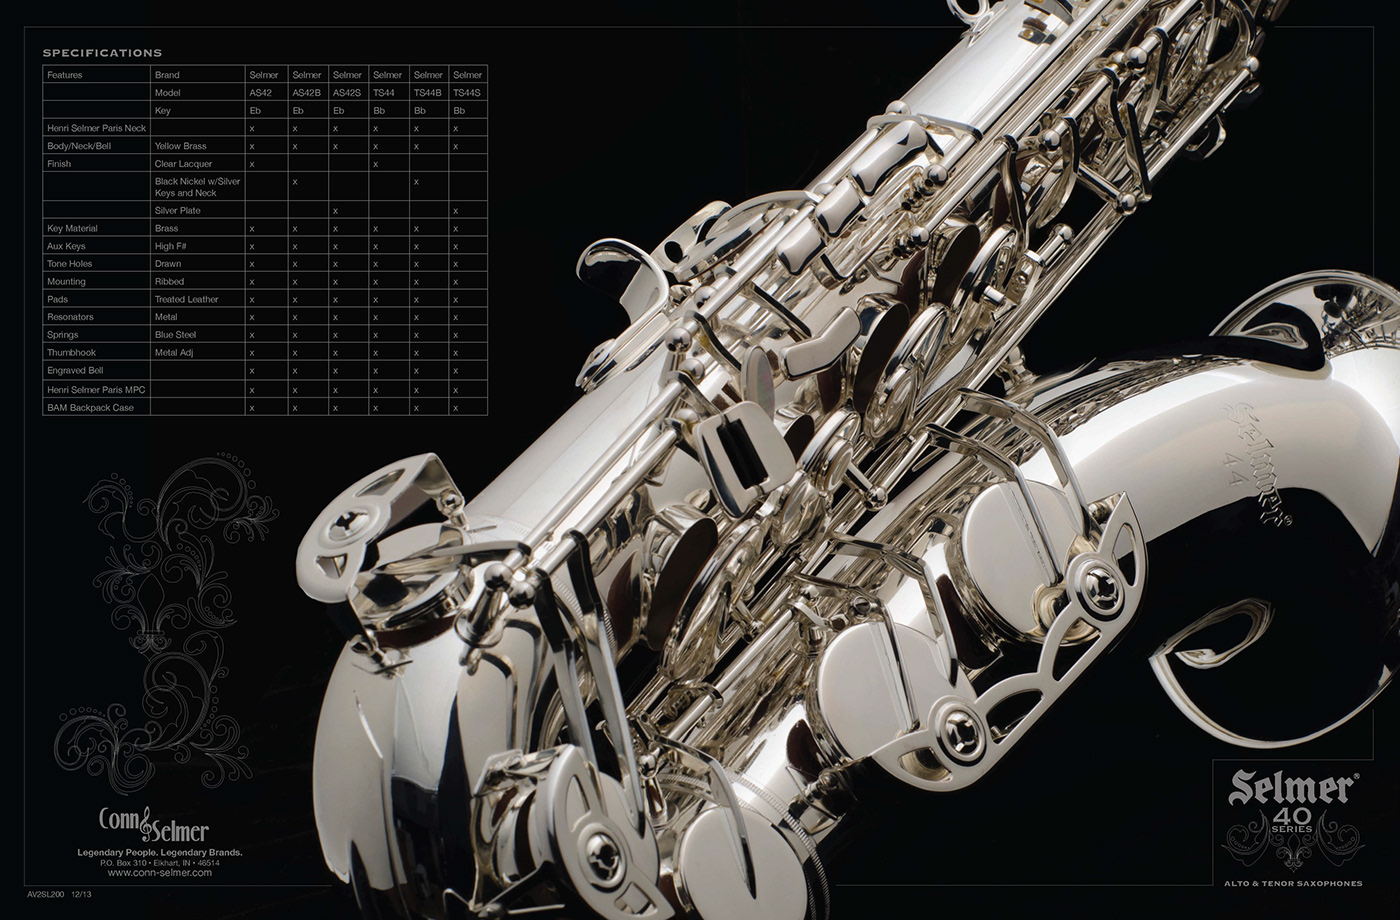 Selmer 40 Series Saxophone Catalog & Sell Sheets on Behance